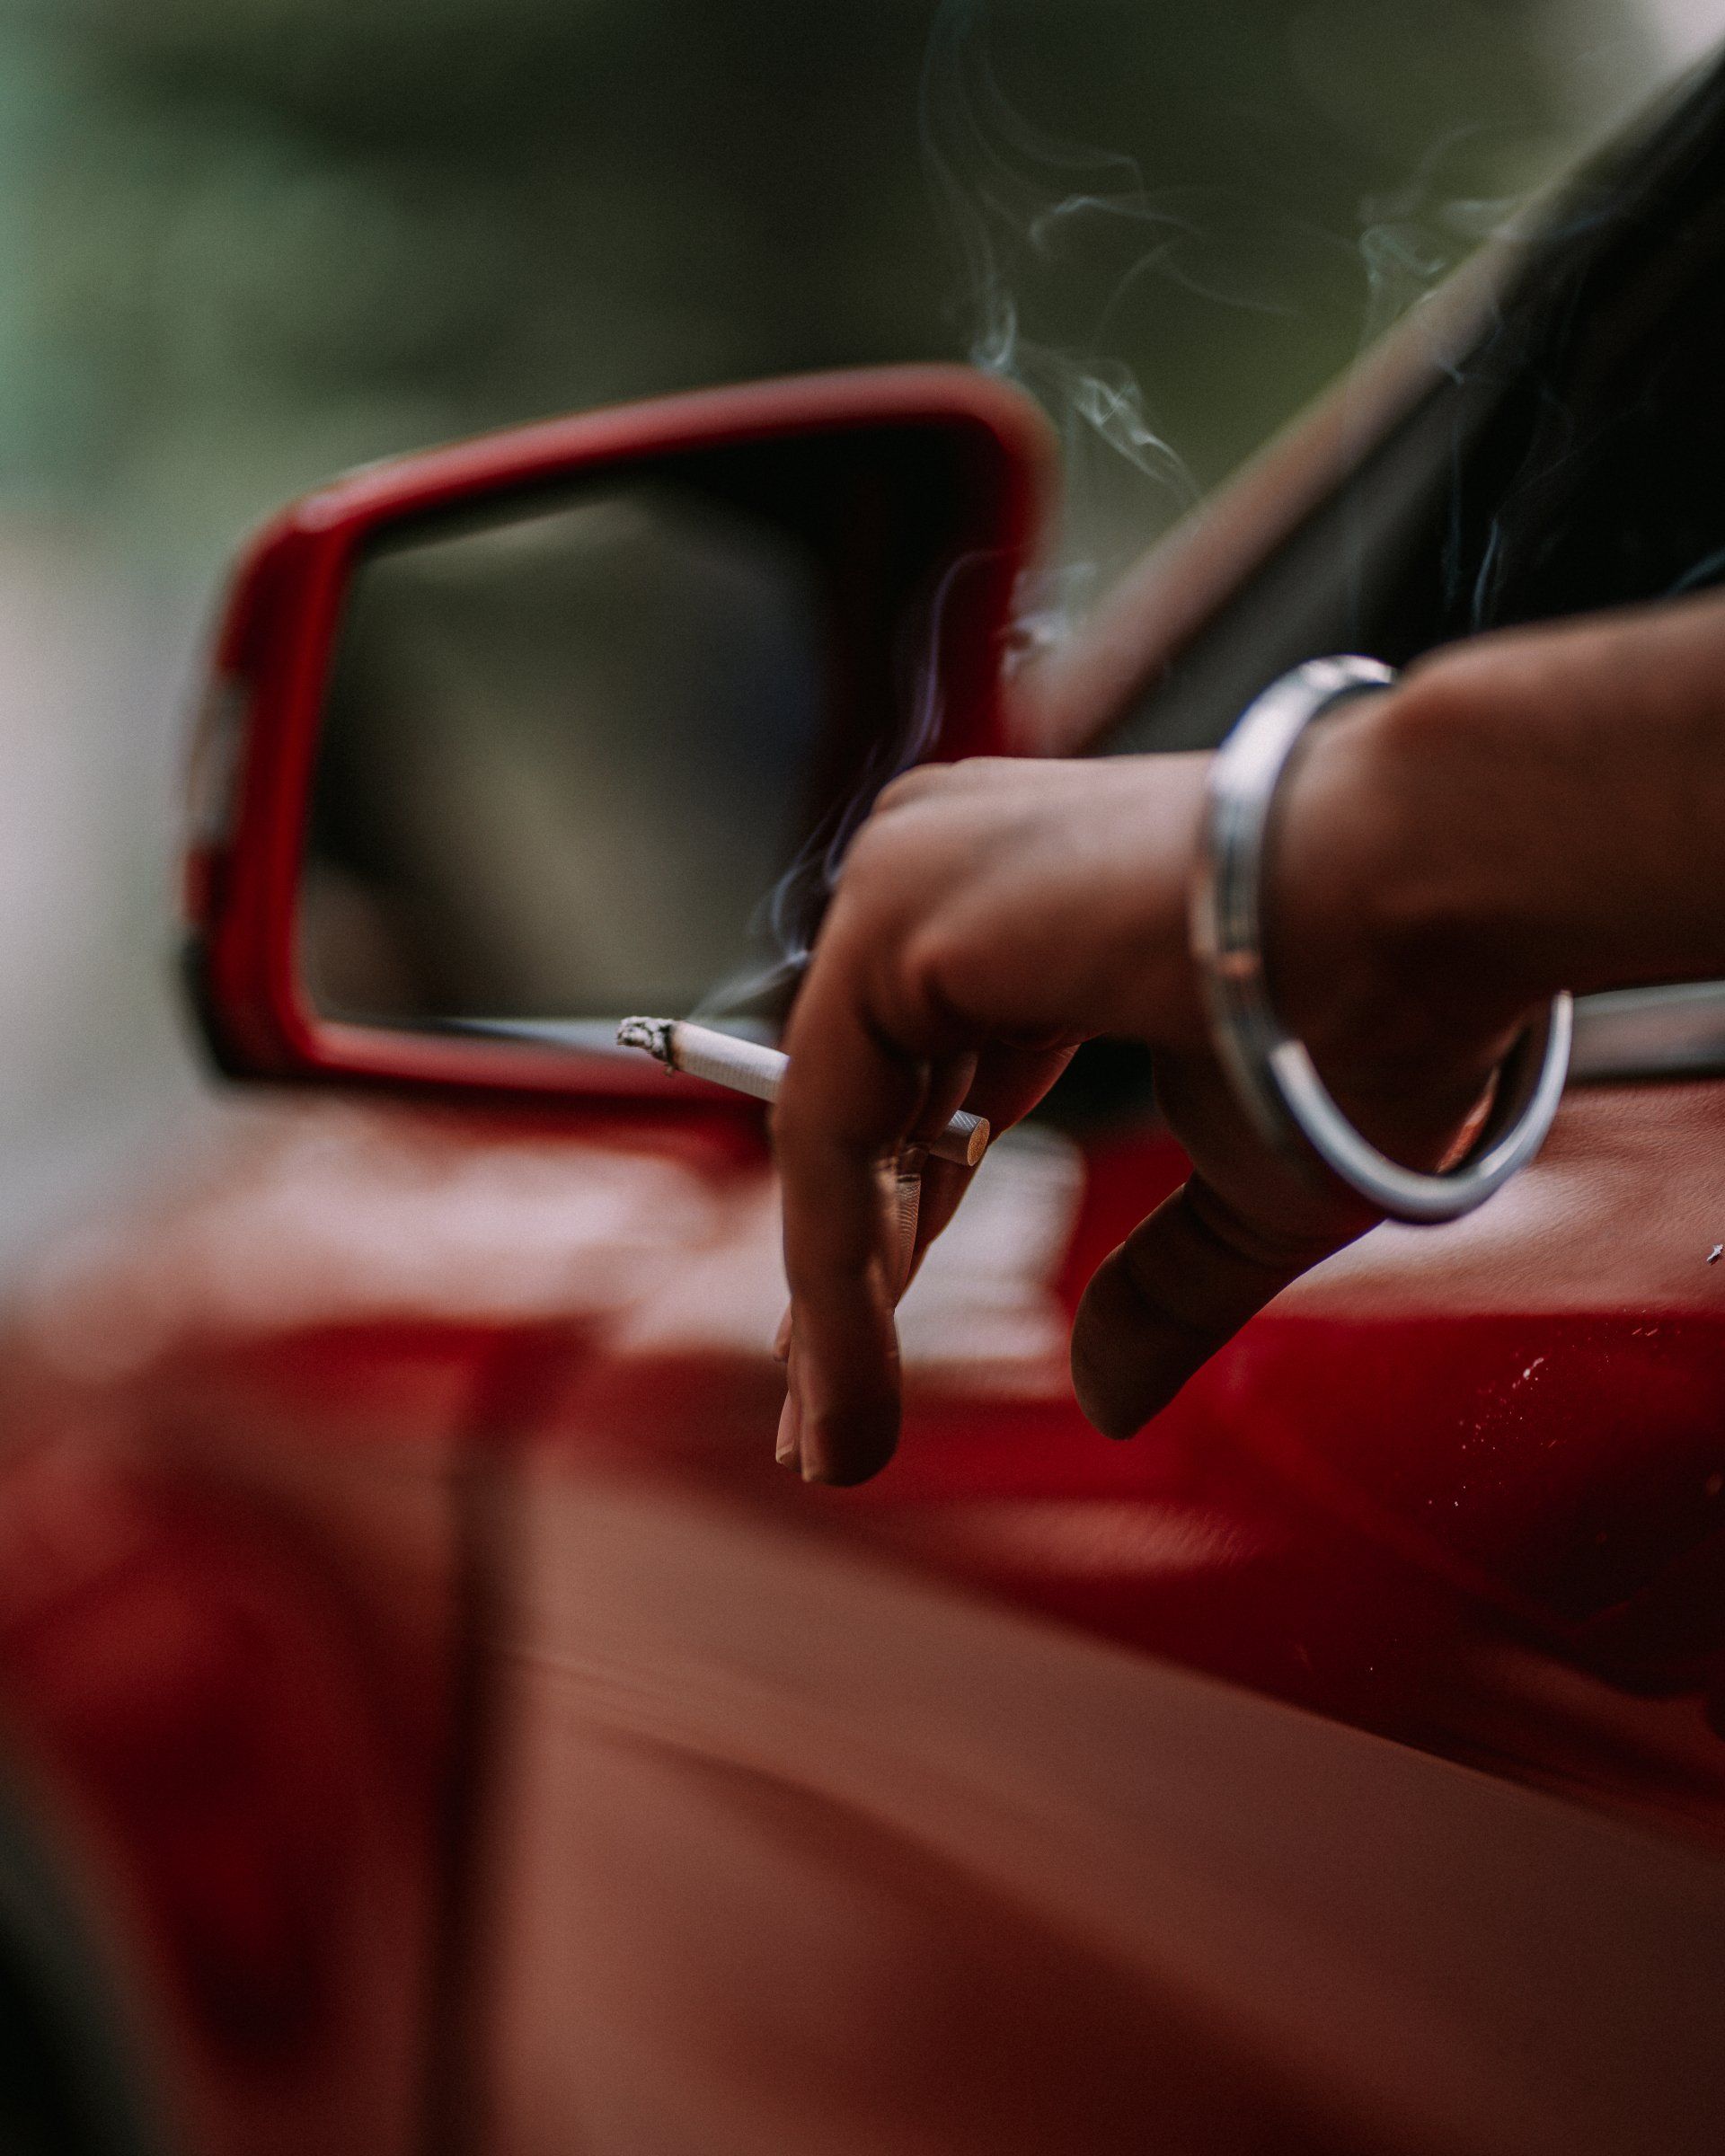 a person smoking in their car